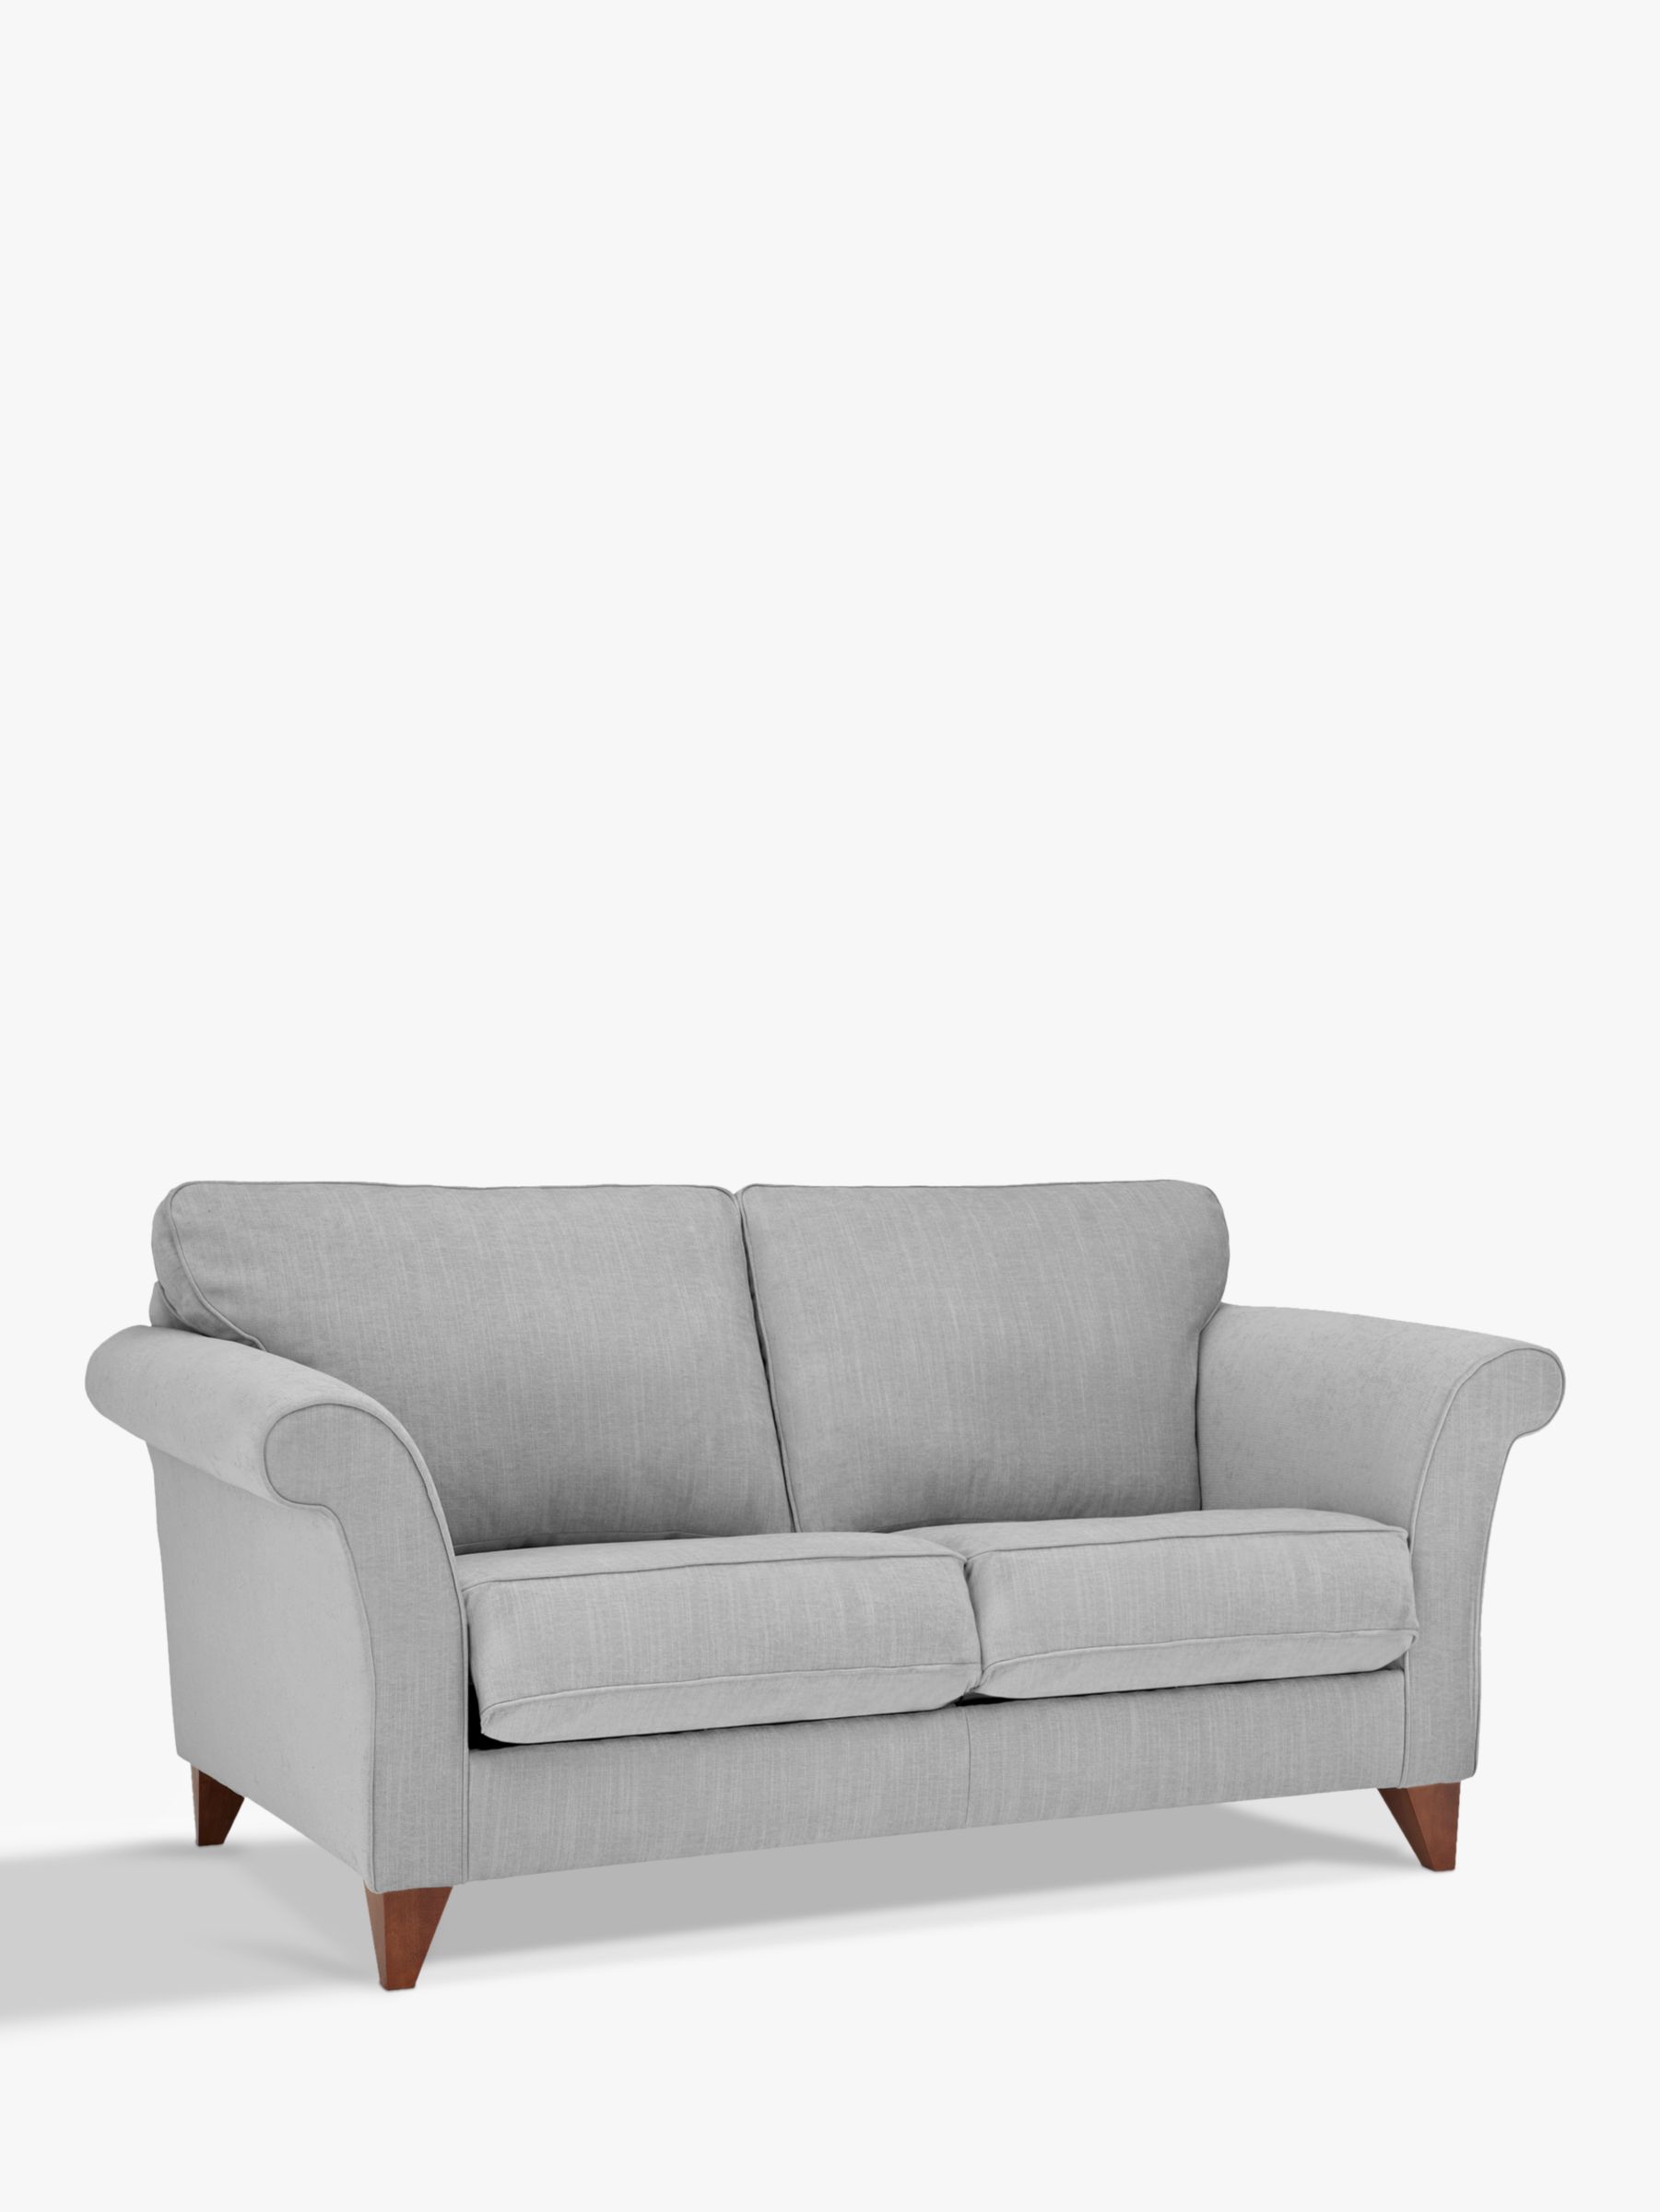 Photo of John lewis charlotte medium 2 seater sofa